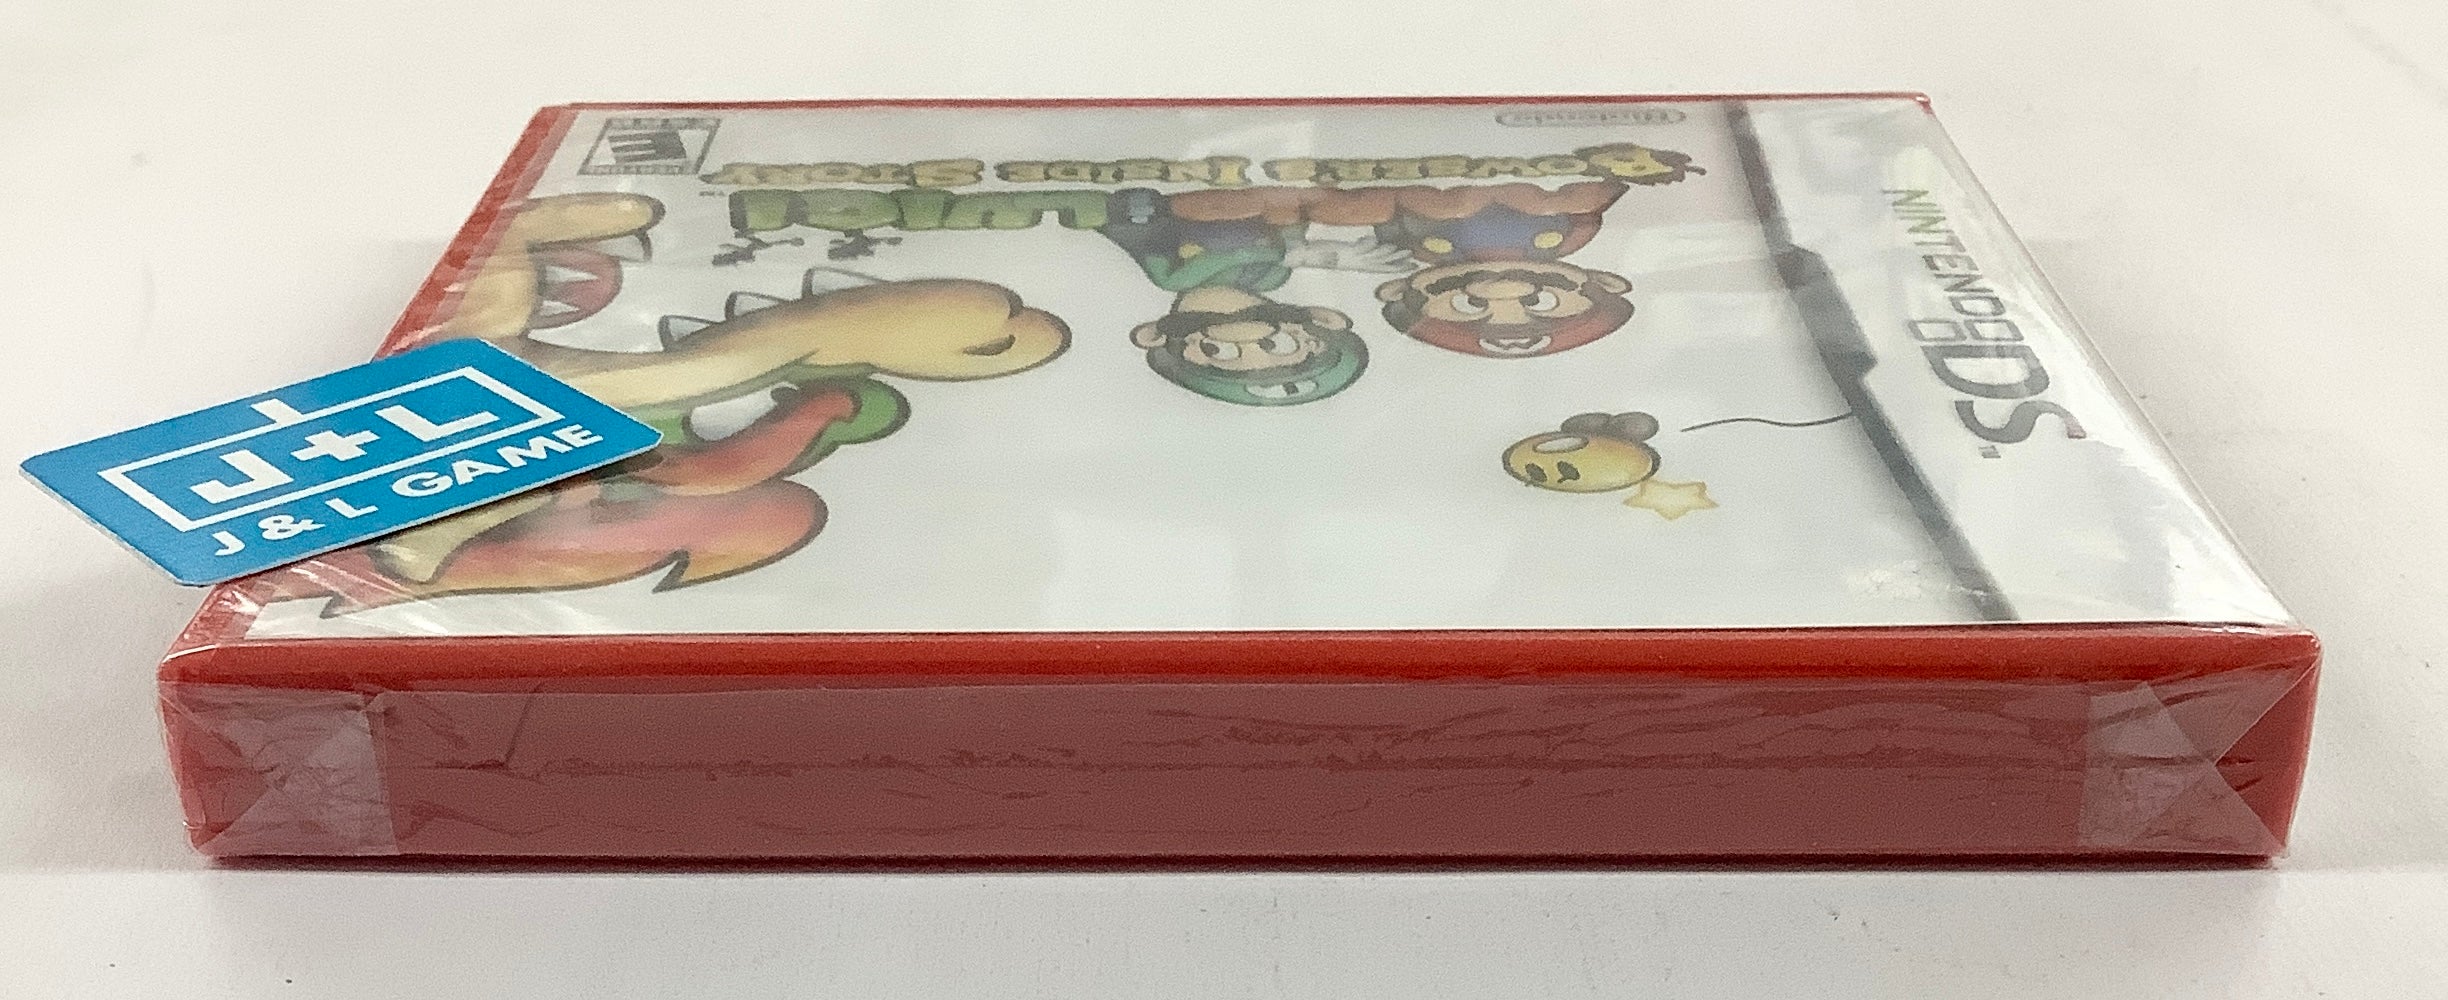 Mario & Luigi Bowser's Inside Story (Red Case) - (NDS) Nintendo DS Video Games Nintendo   